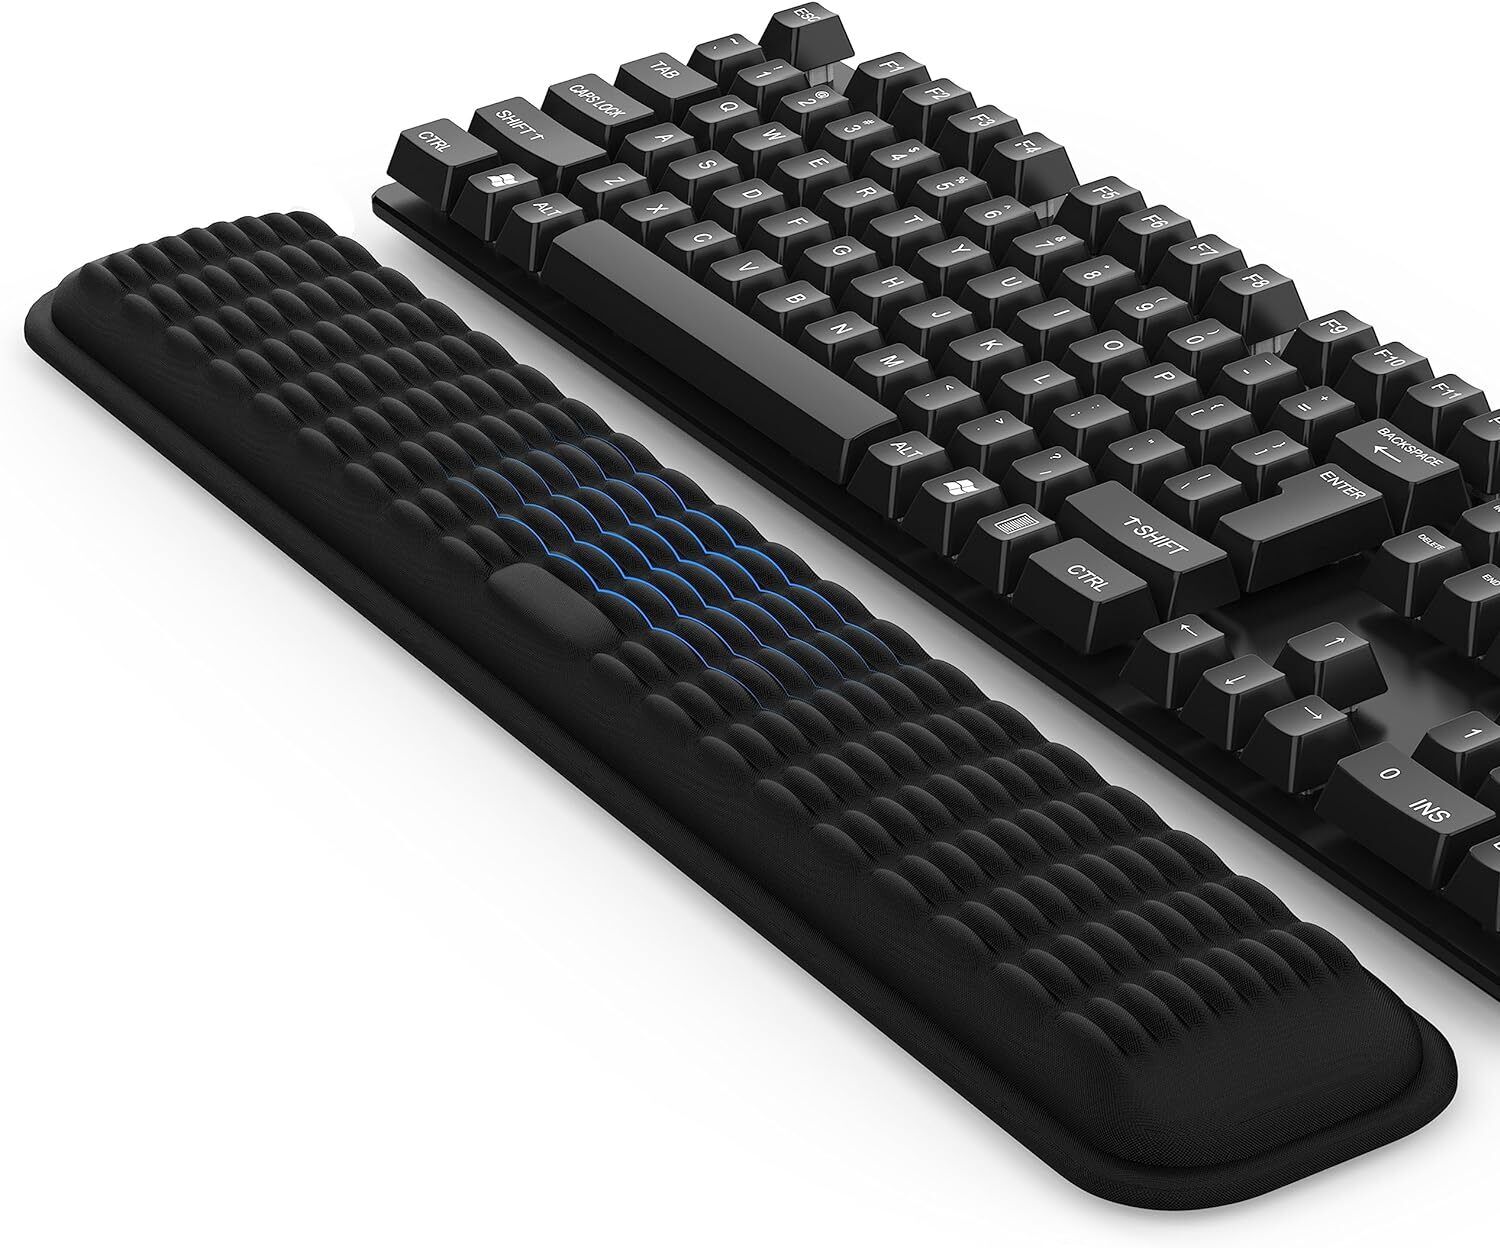 Keyboard Wrist Rest, Soft Memory Foam Enlarge & Wider, Classic Black 